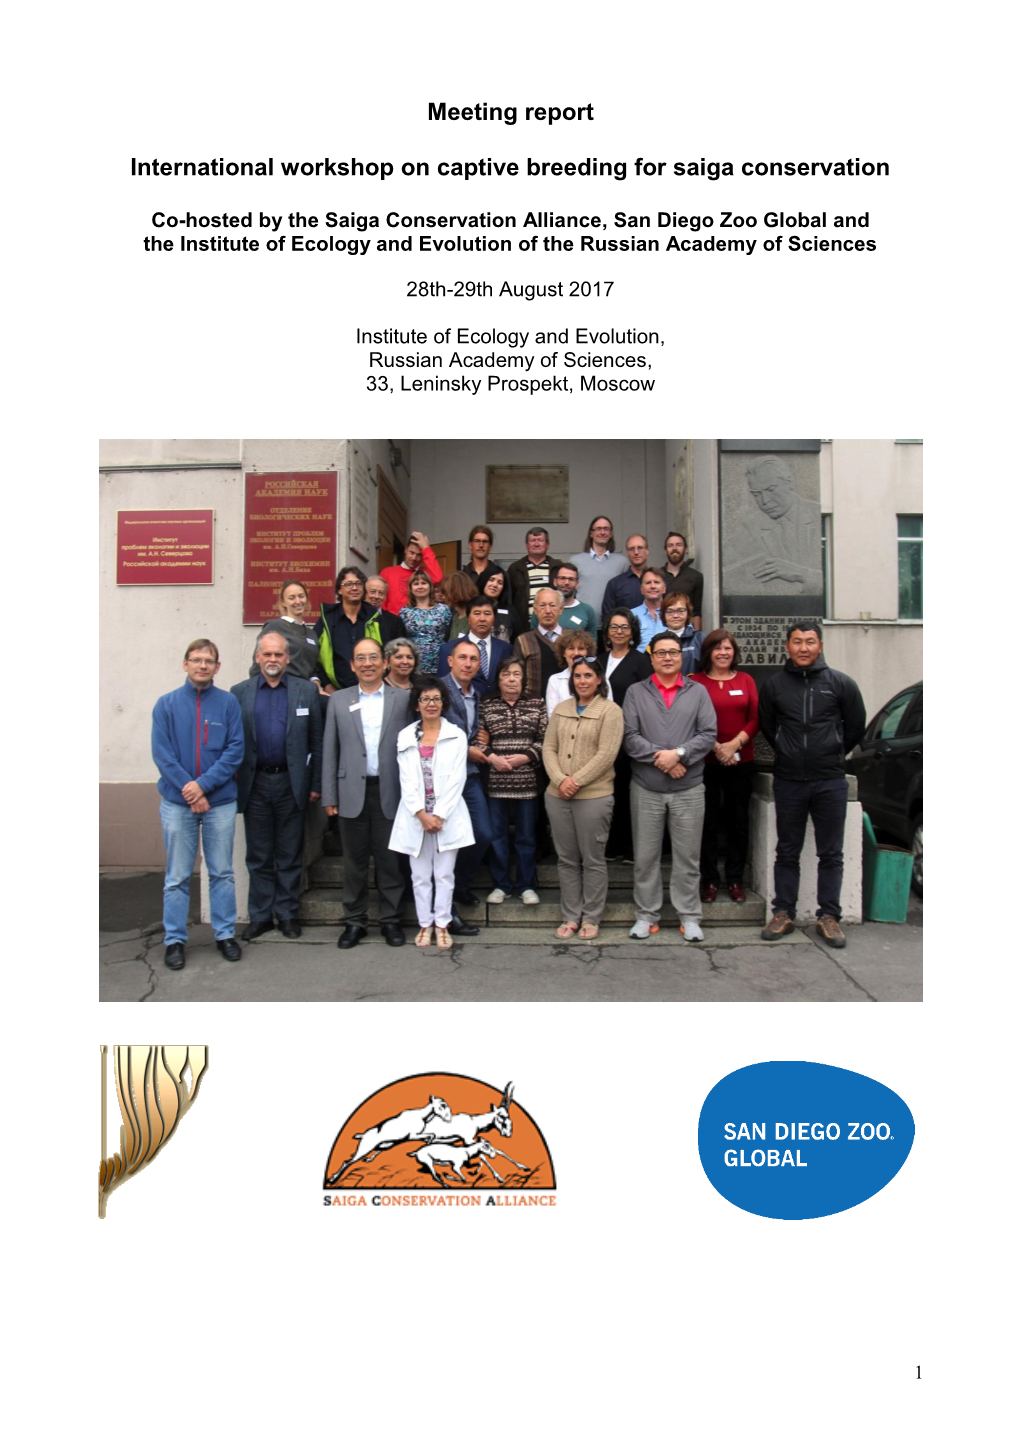 Meeting Report International Workshop on Captive Breeding for Saiga